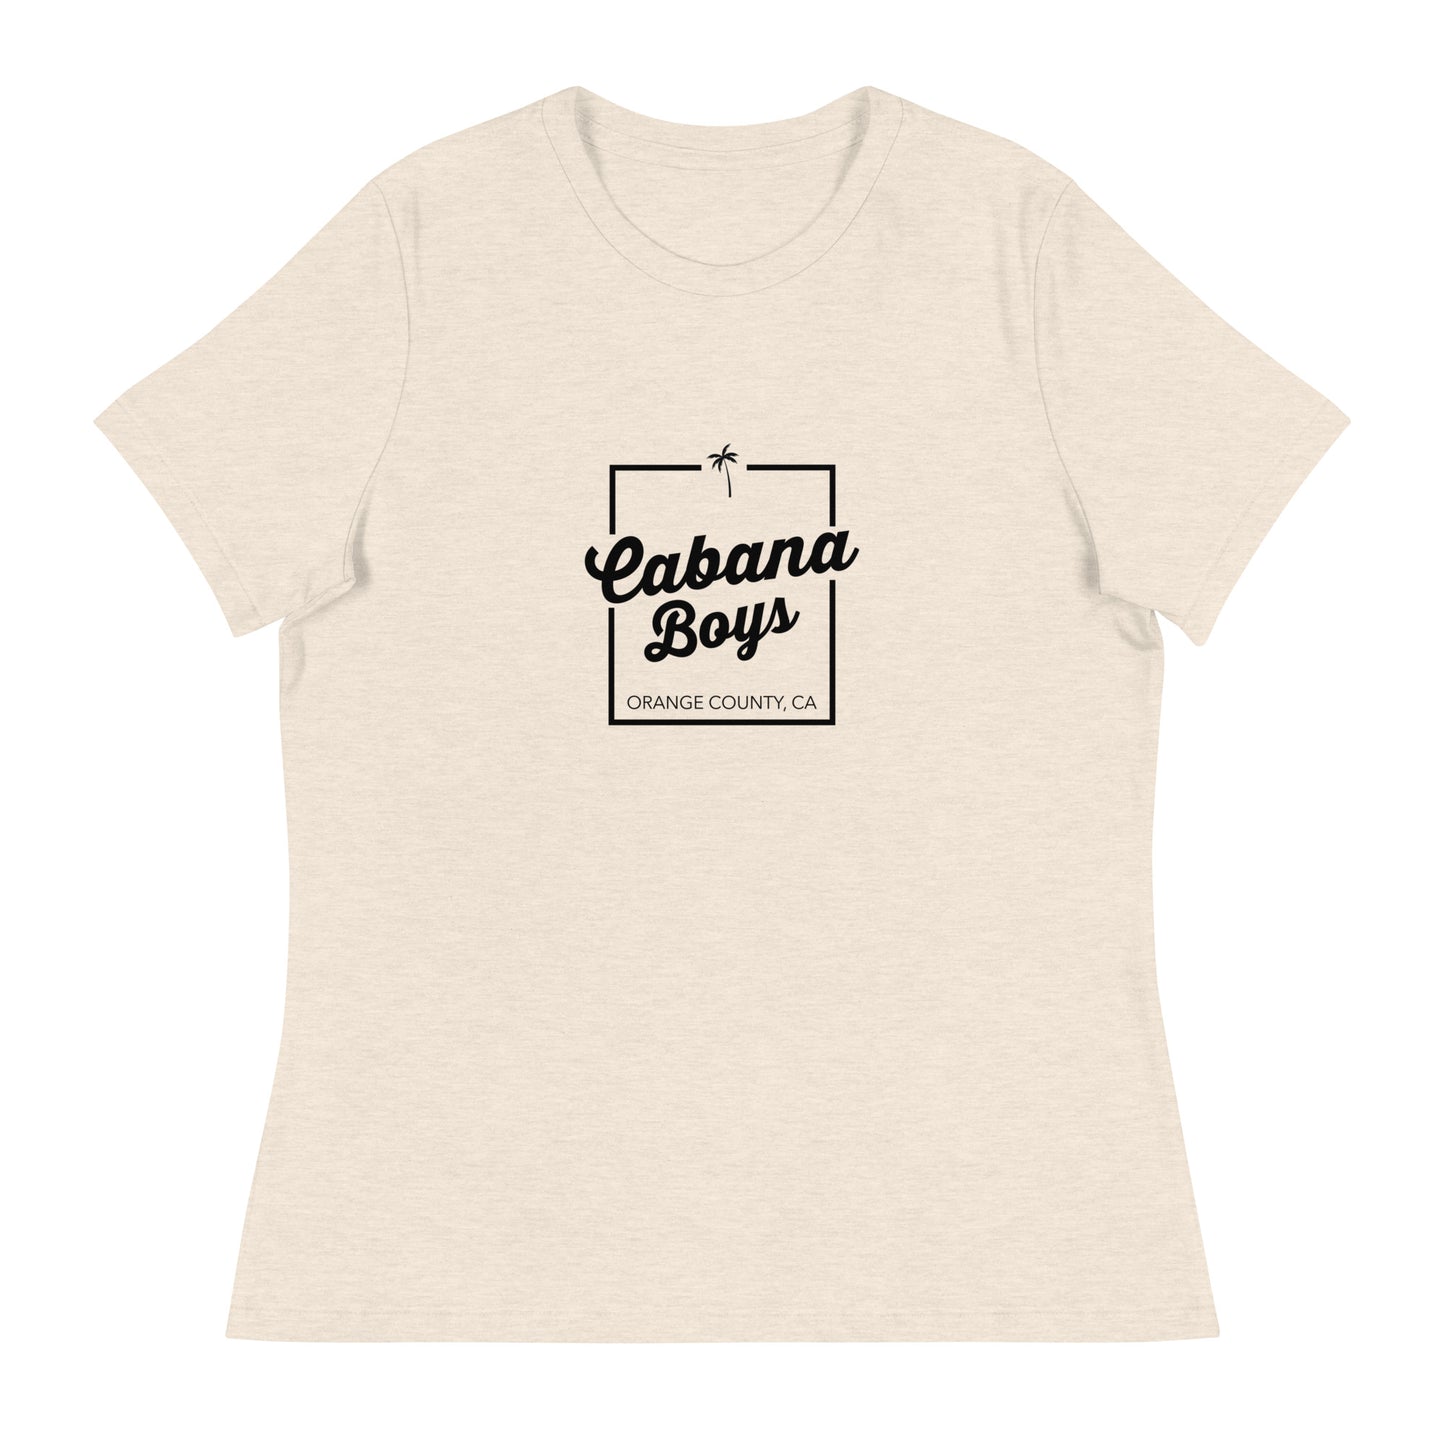 Cabana Boys Orange County Women's Relaxed T-Shirt